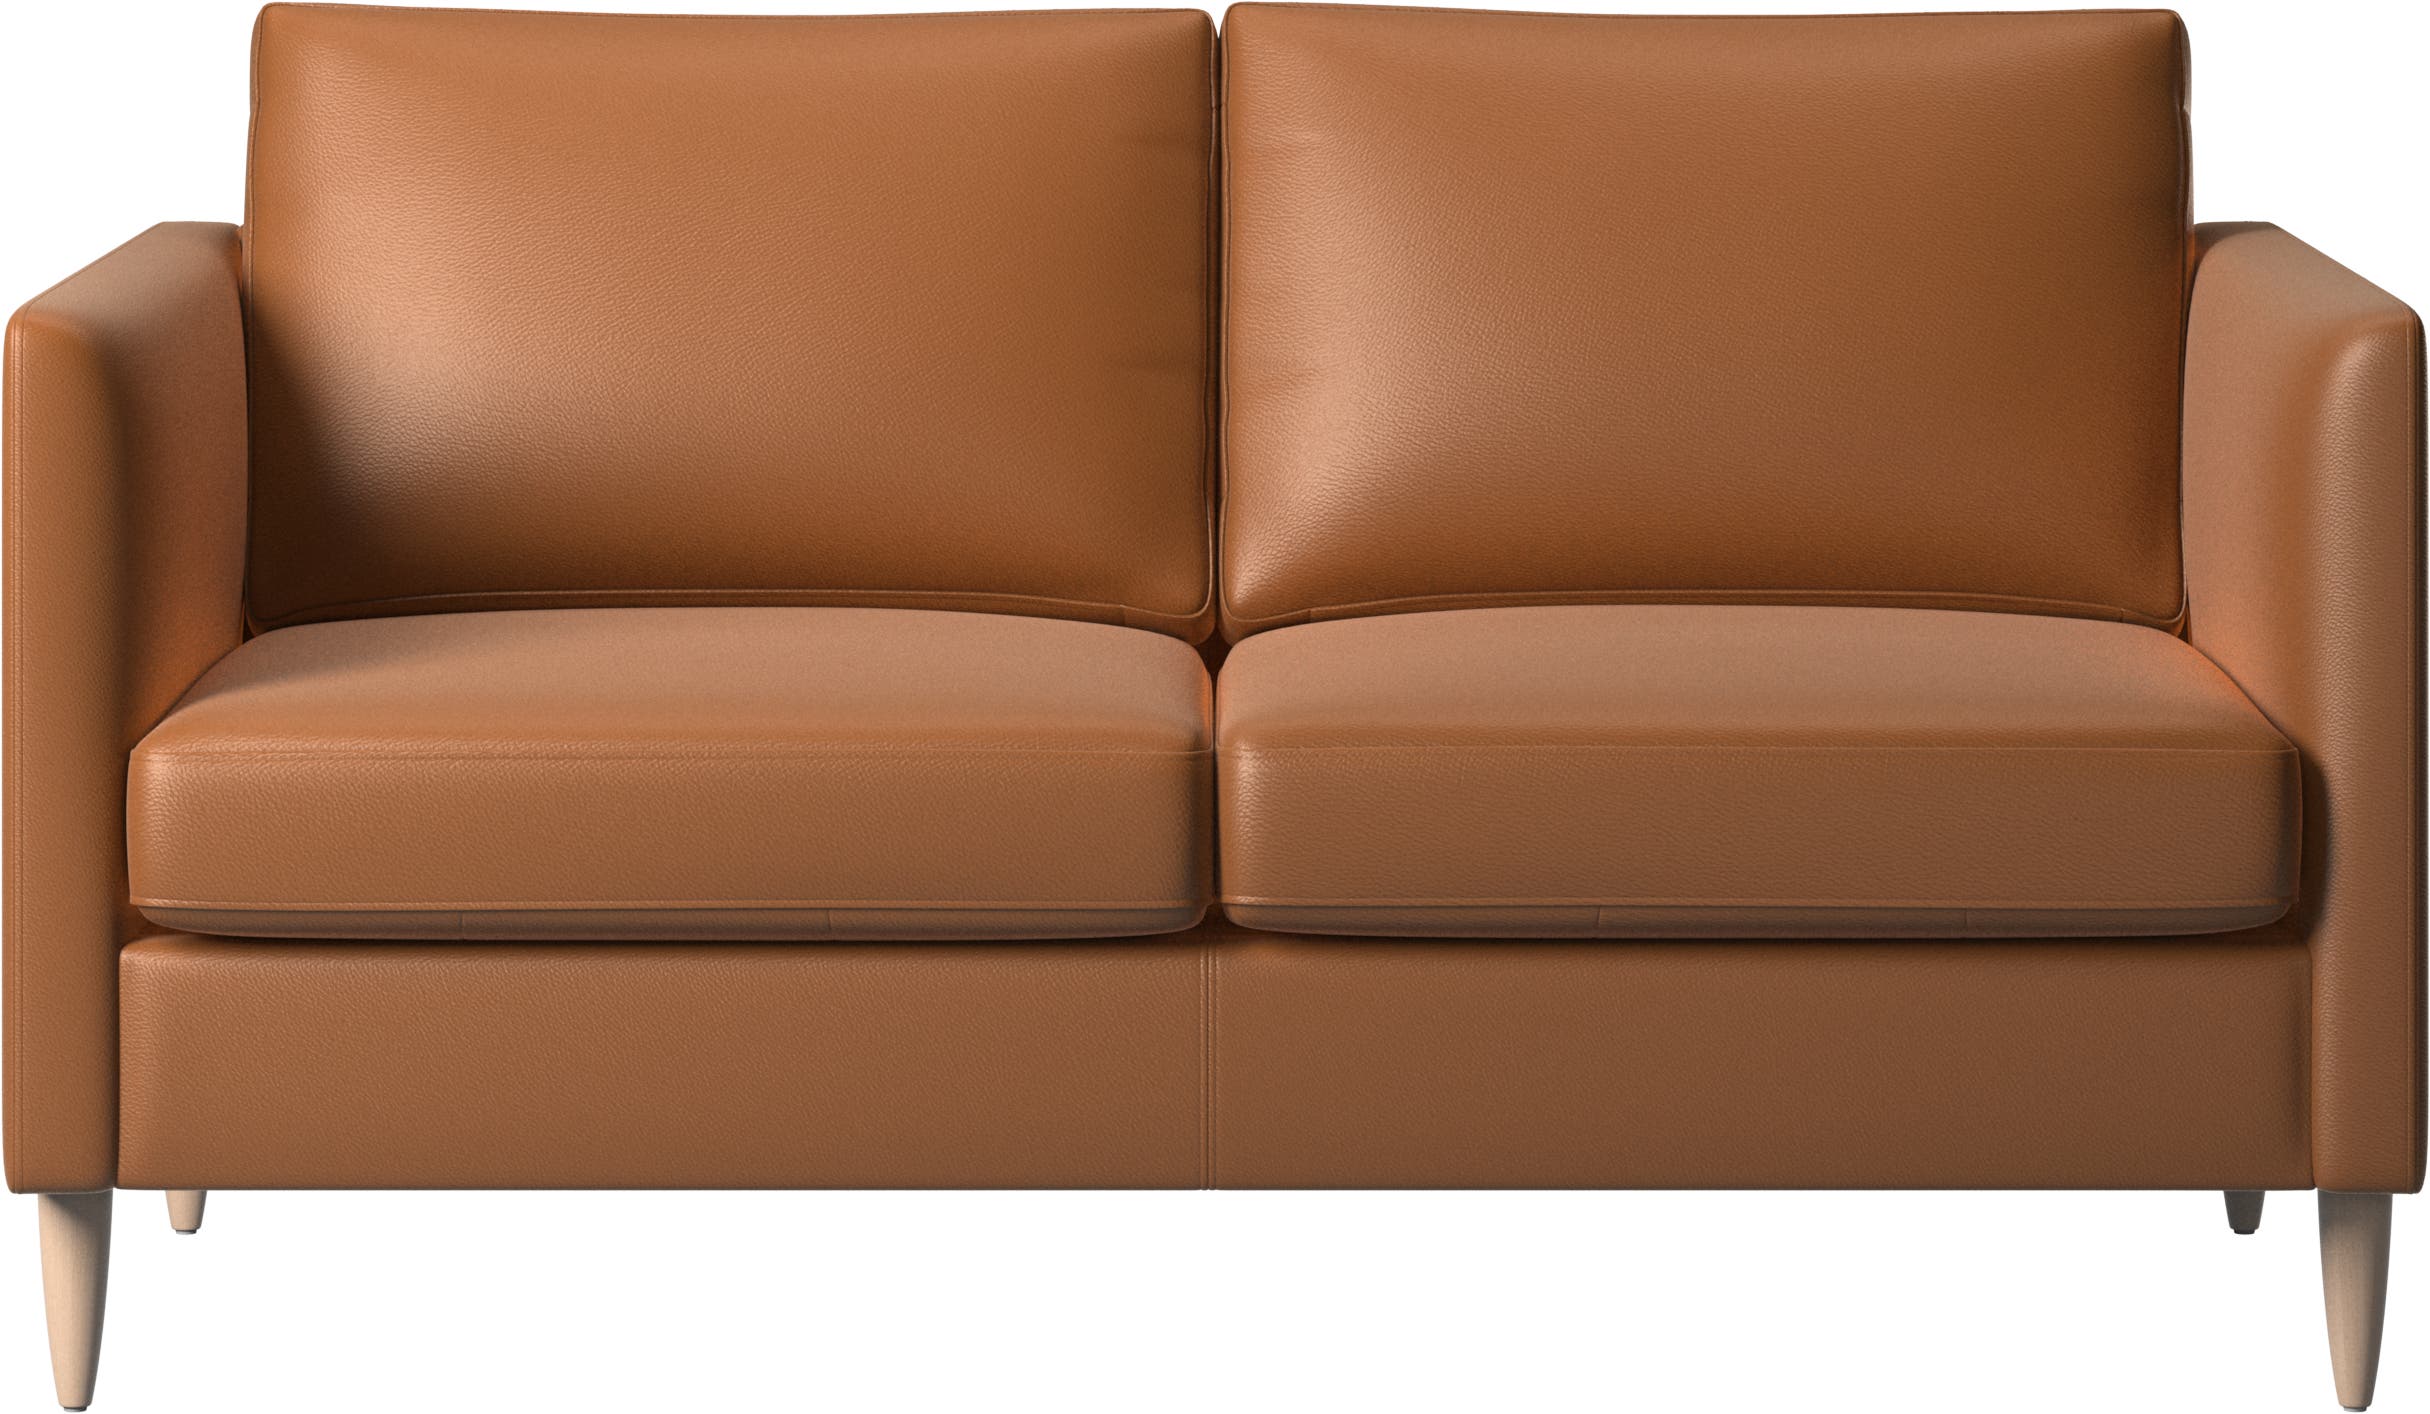 Indivi-sohva